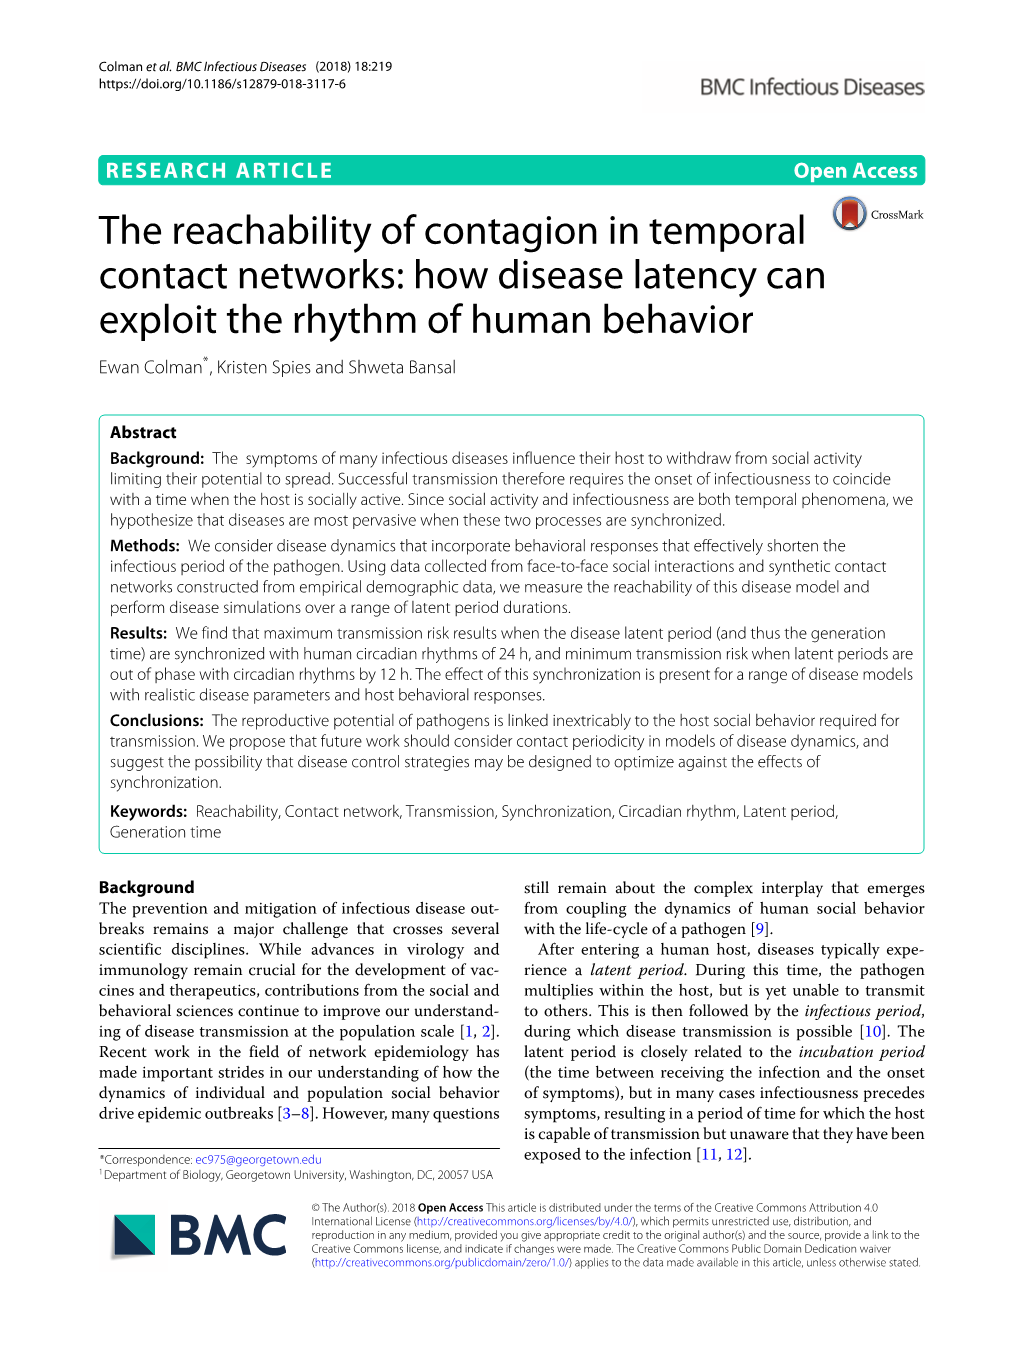 How Disease Latency Can Exploit the Rhythm of Human Behavior Ewan Colman*, Kristen Spies and Shweta Bansal